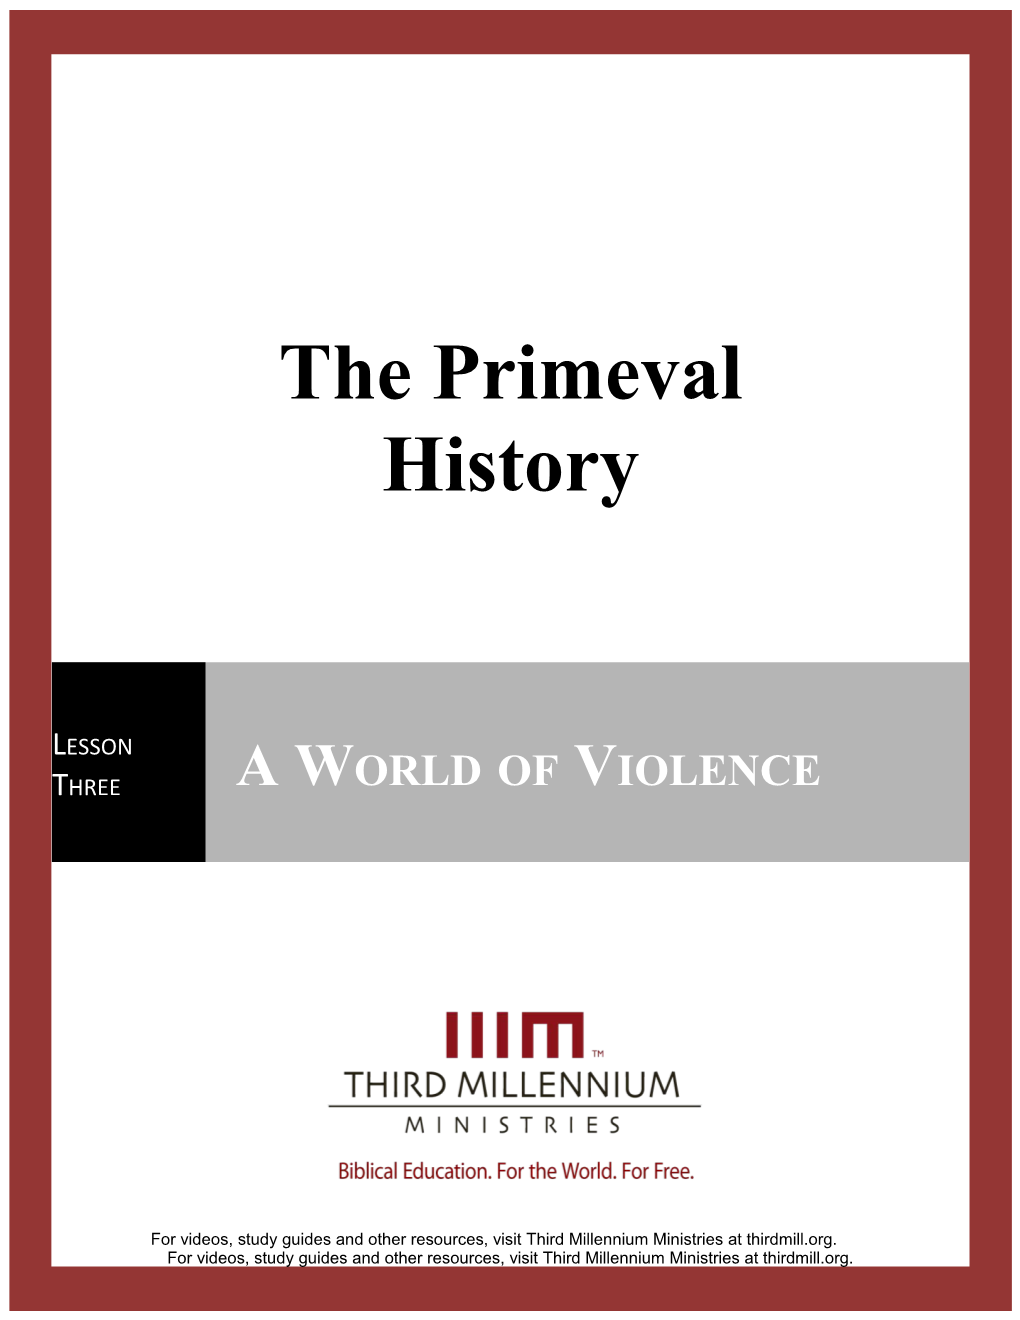 The Primeval History, Lesson 3